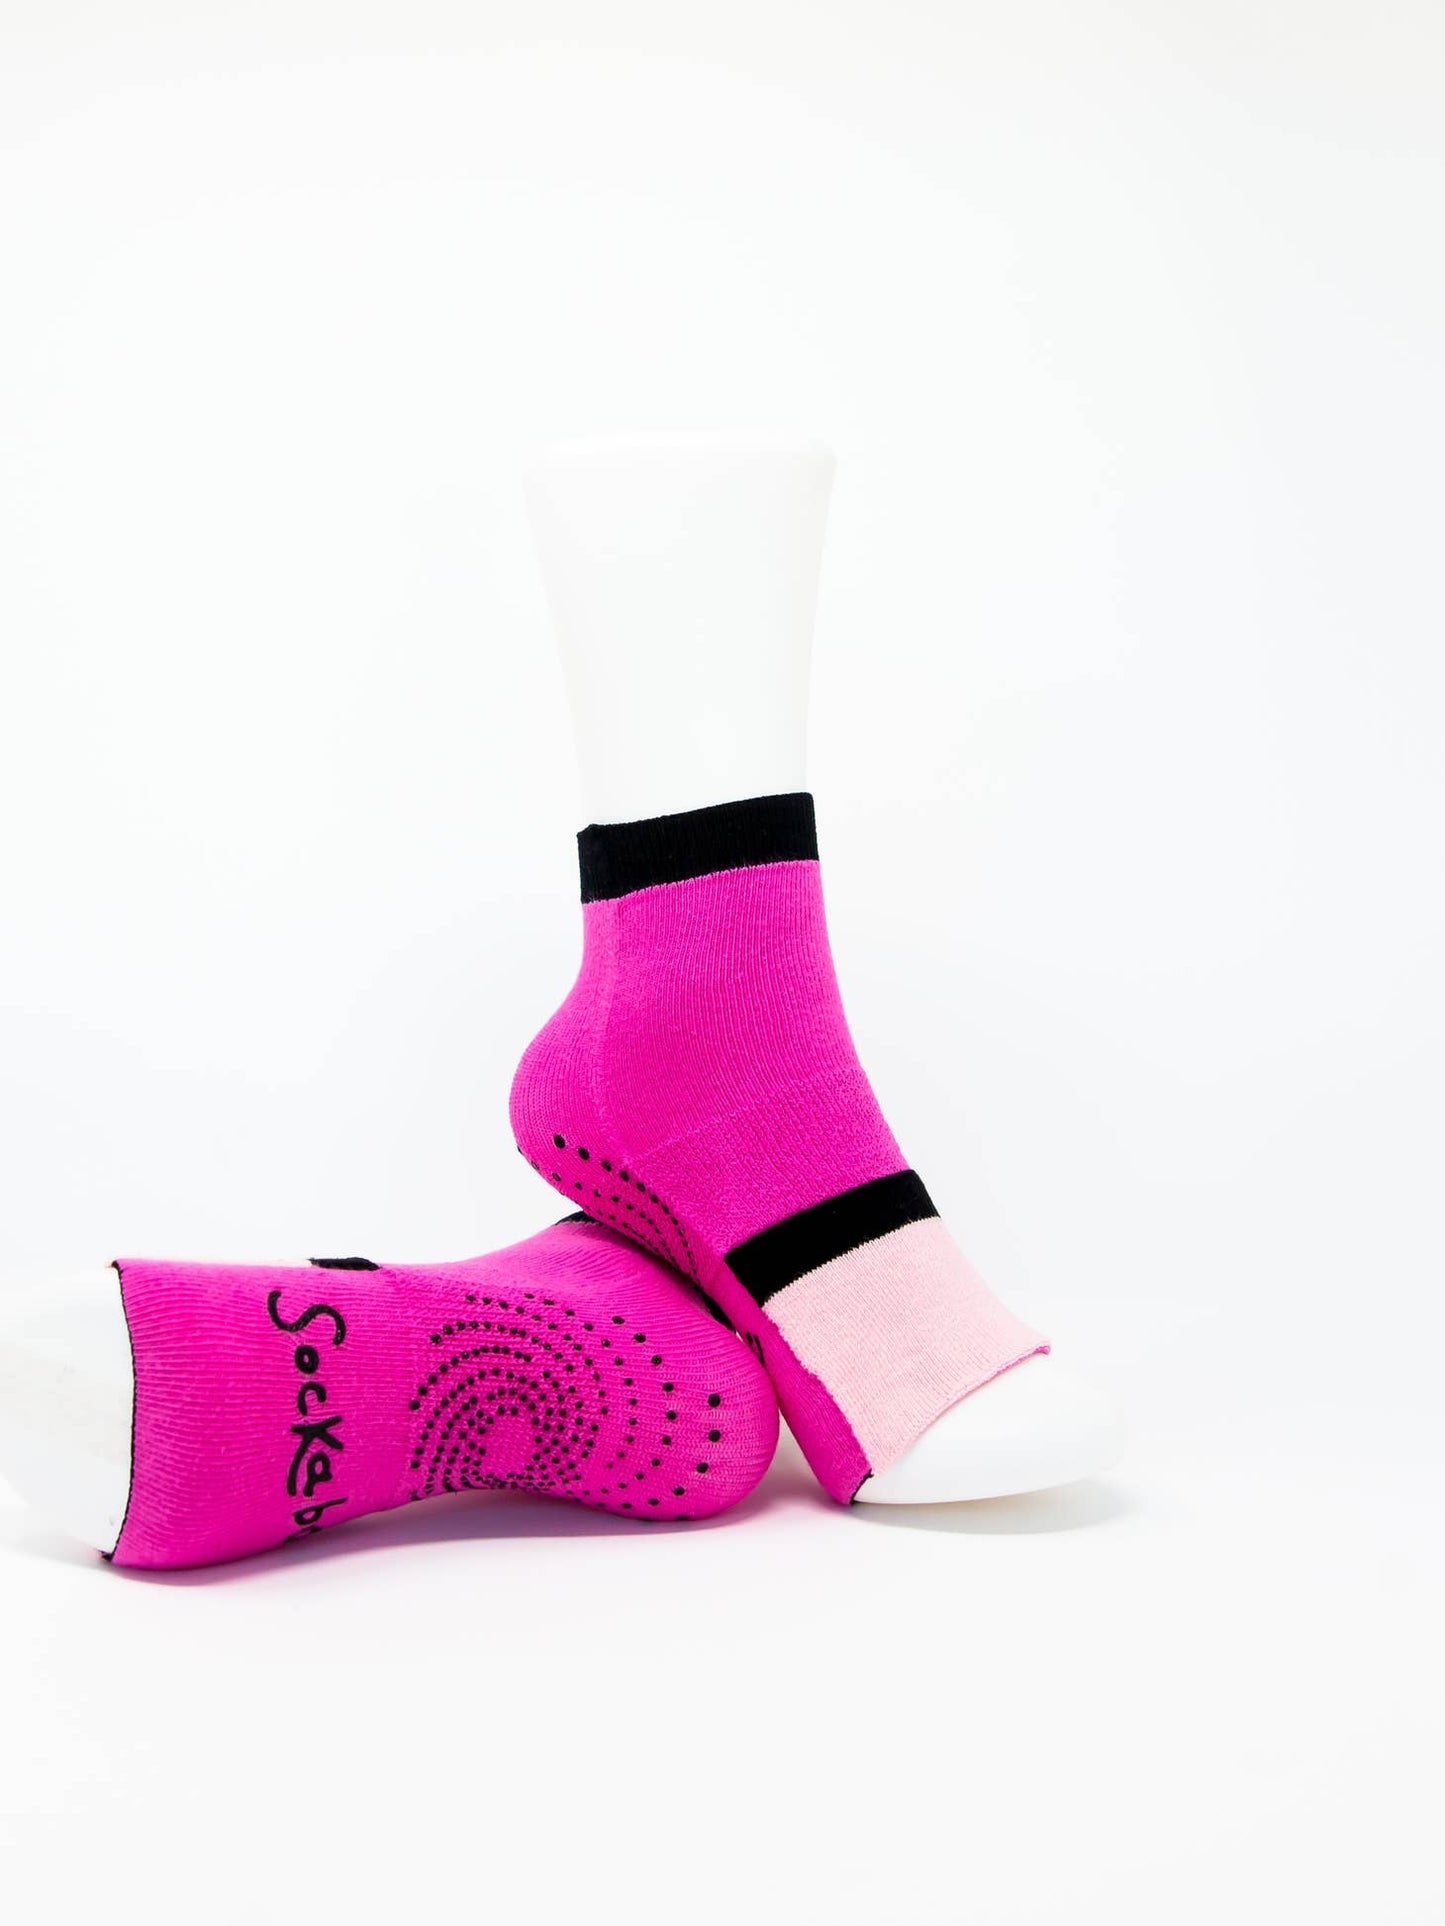 Sockabu Seamless Compression Socks